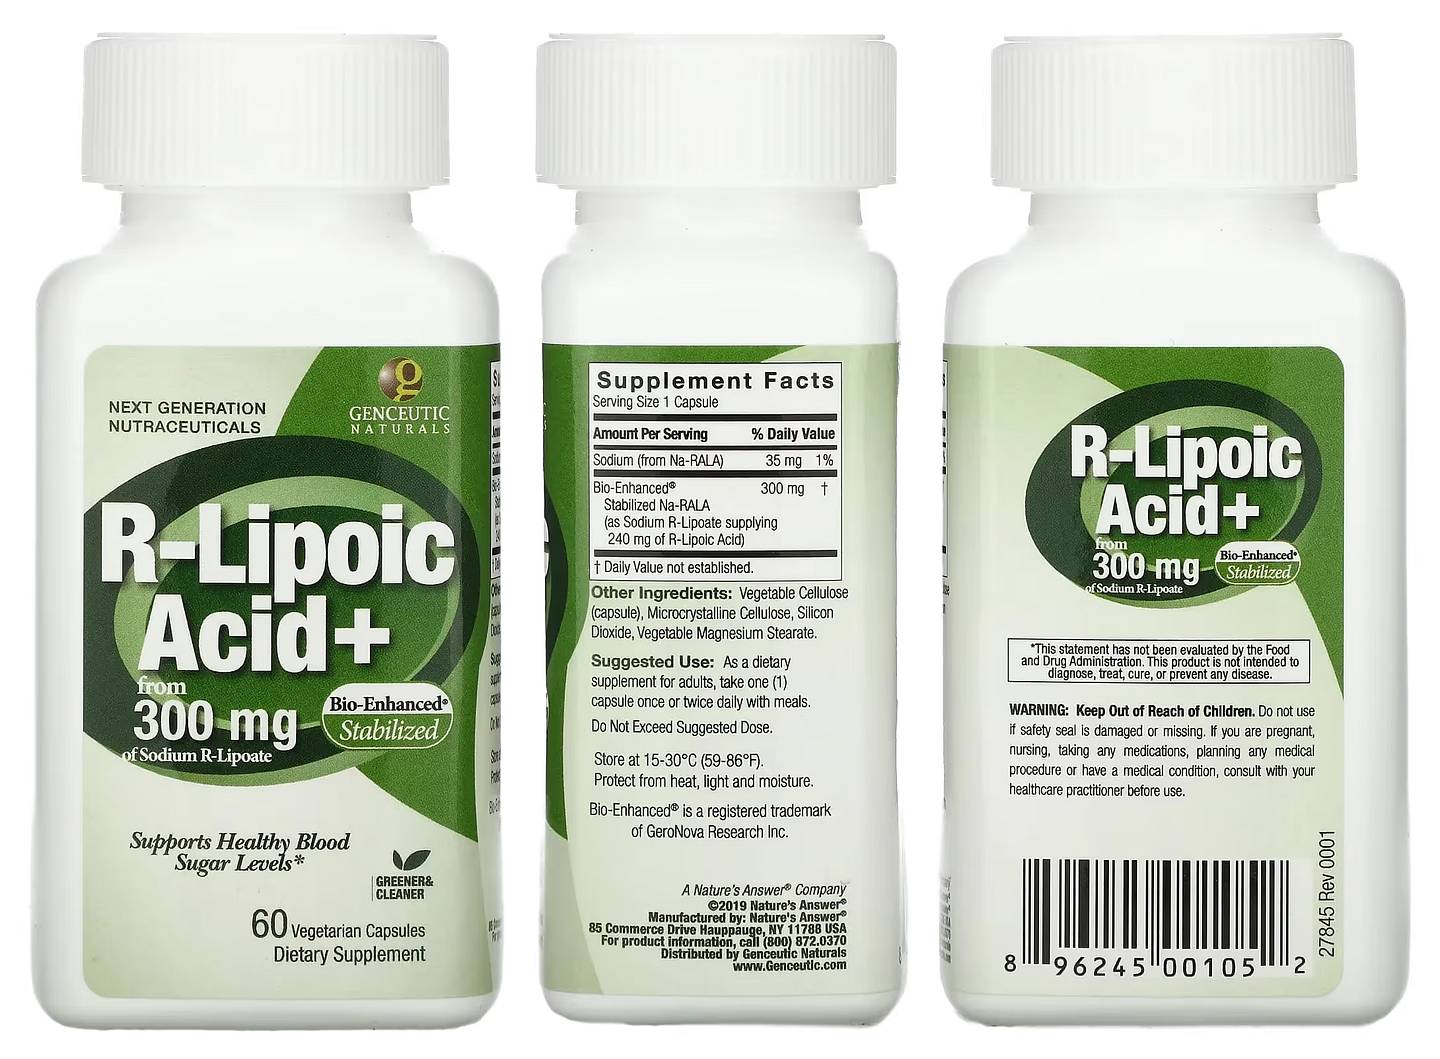 Genceutic Naturals, R-Lipoic Acid+ packaging